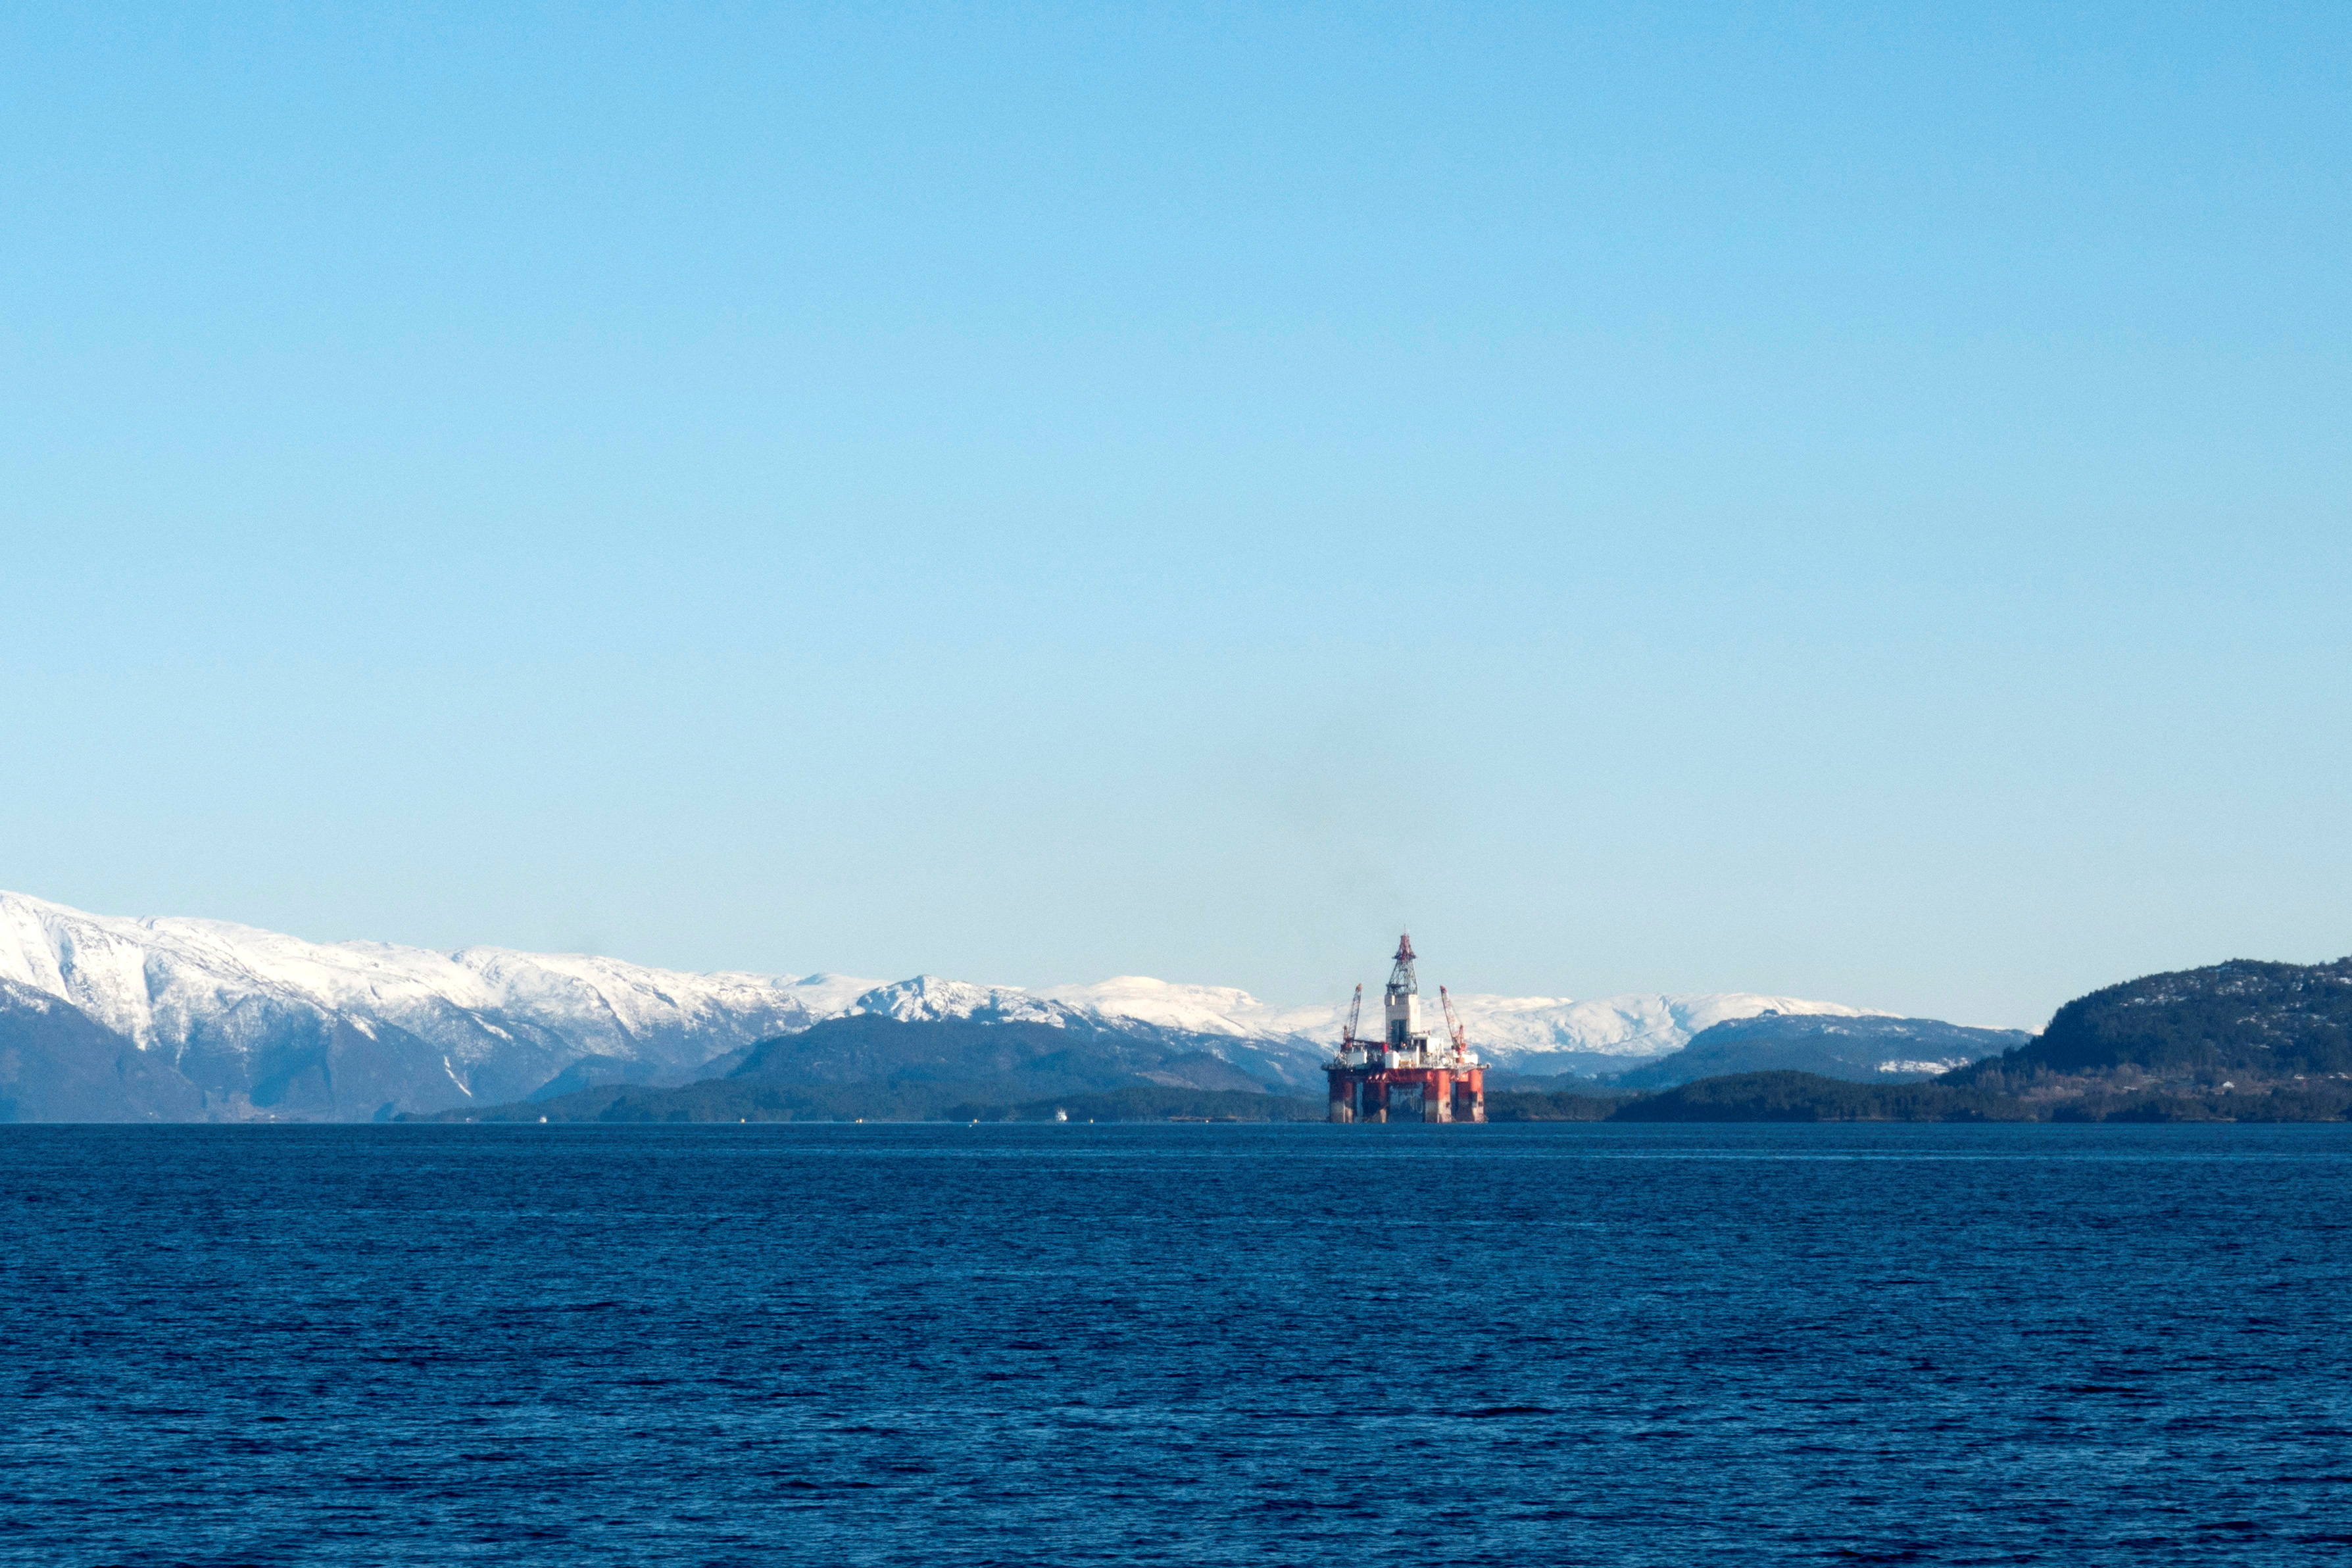 The West Hercules drilling rig leaves Skipavika